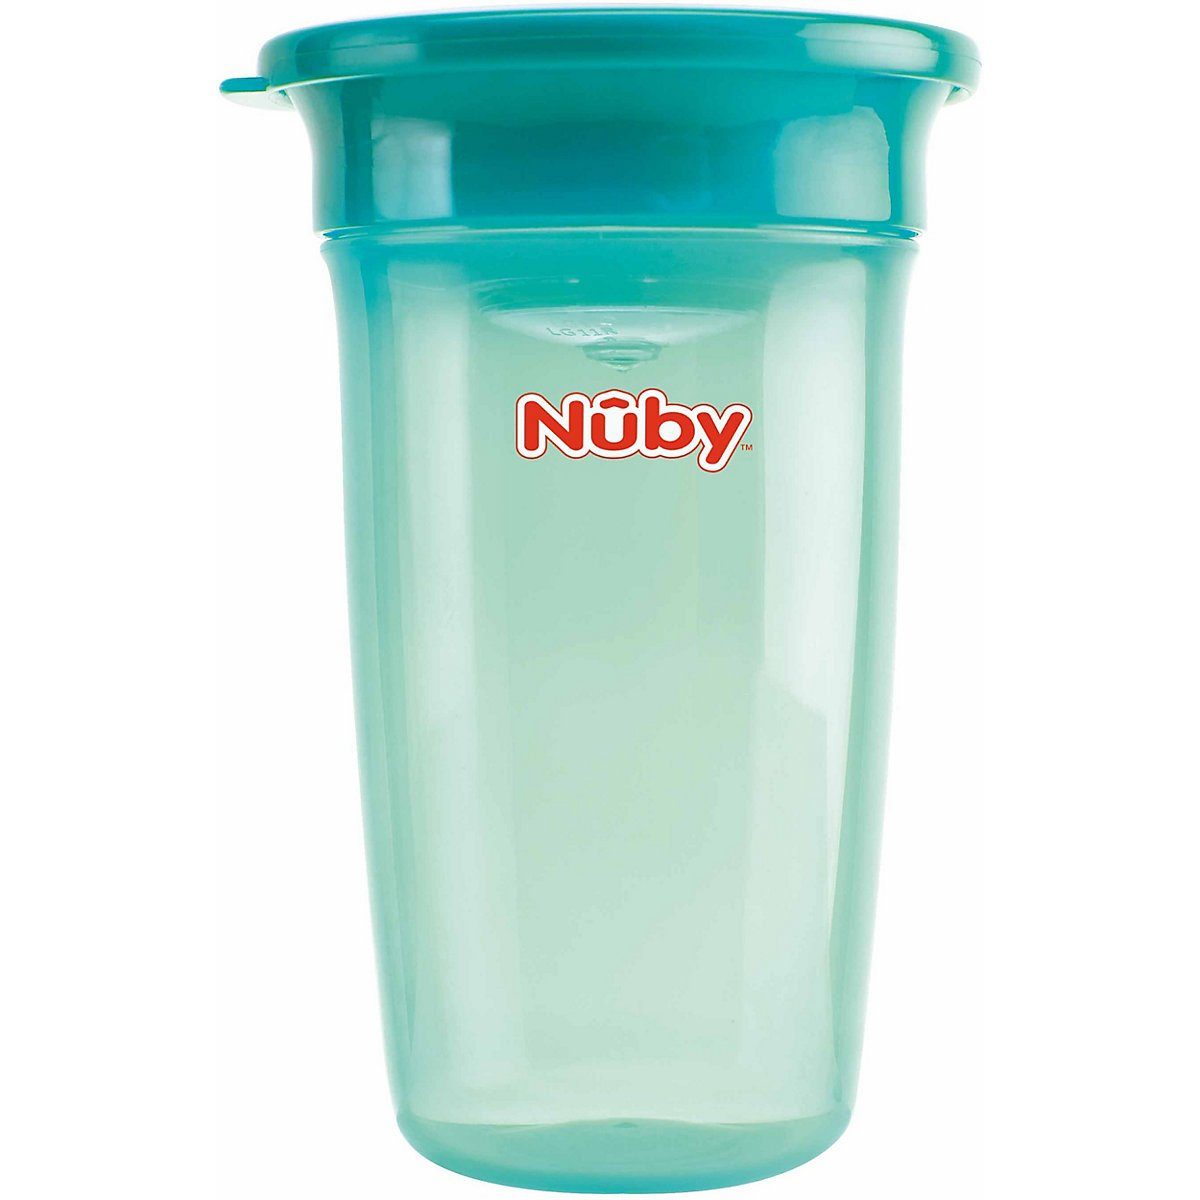 Kinder Babyernährung Nuby Trinklernbecher Trinklernbecher Wonder Cup, aqua, 300ml